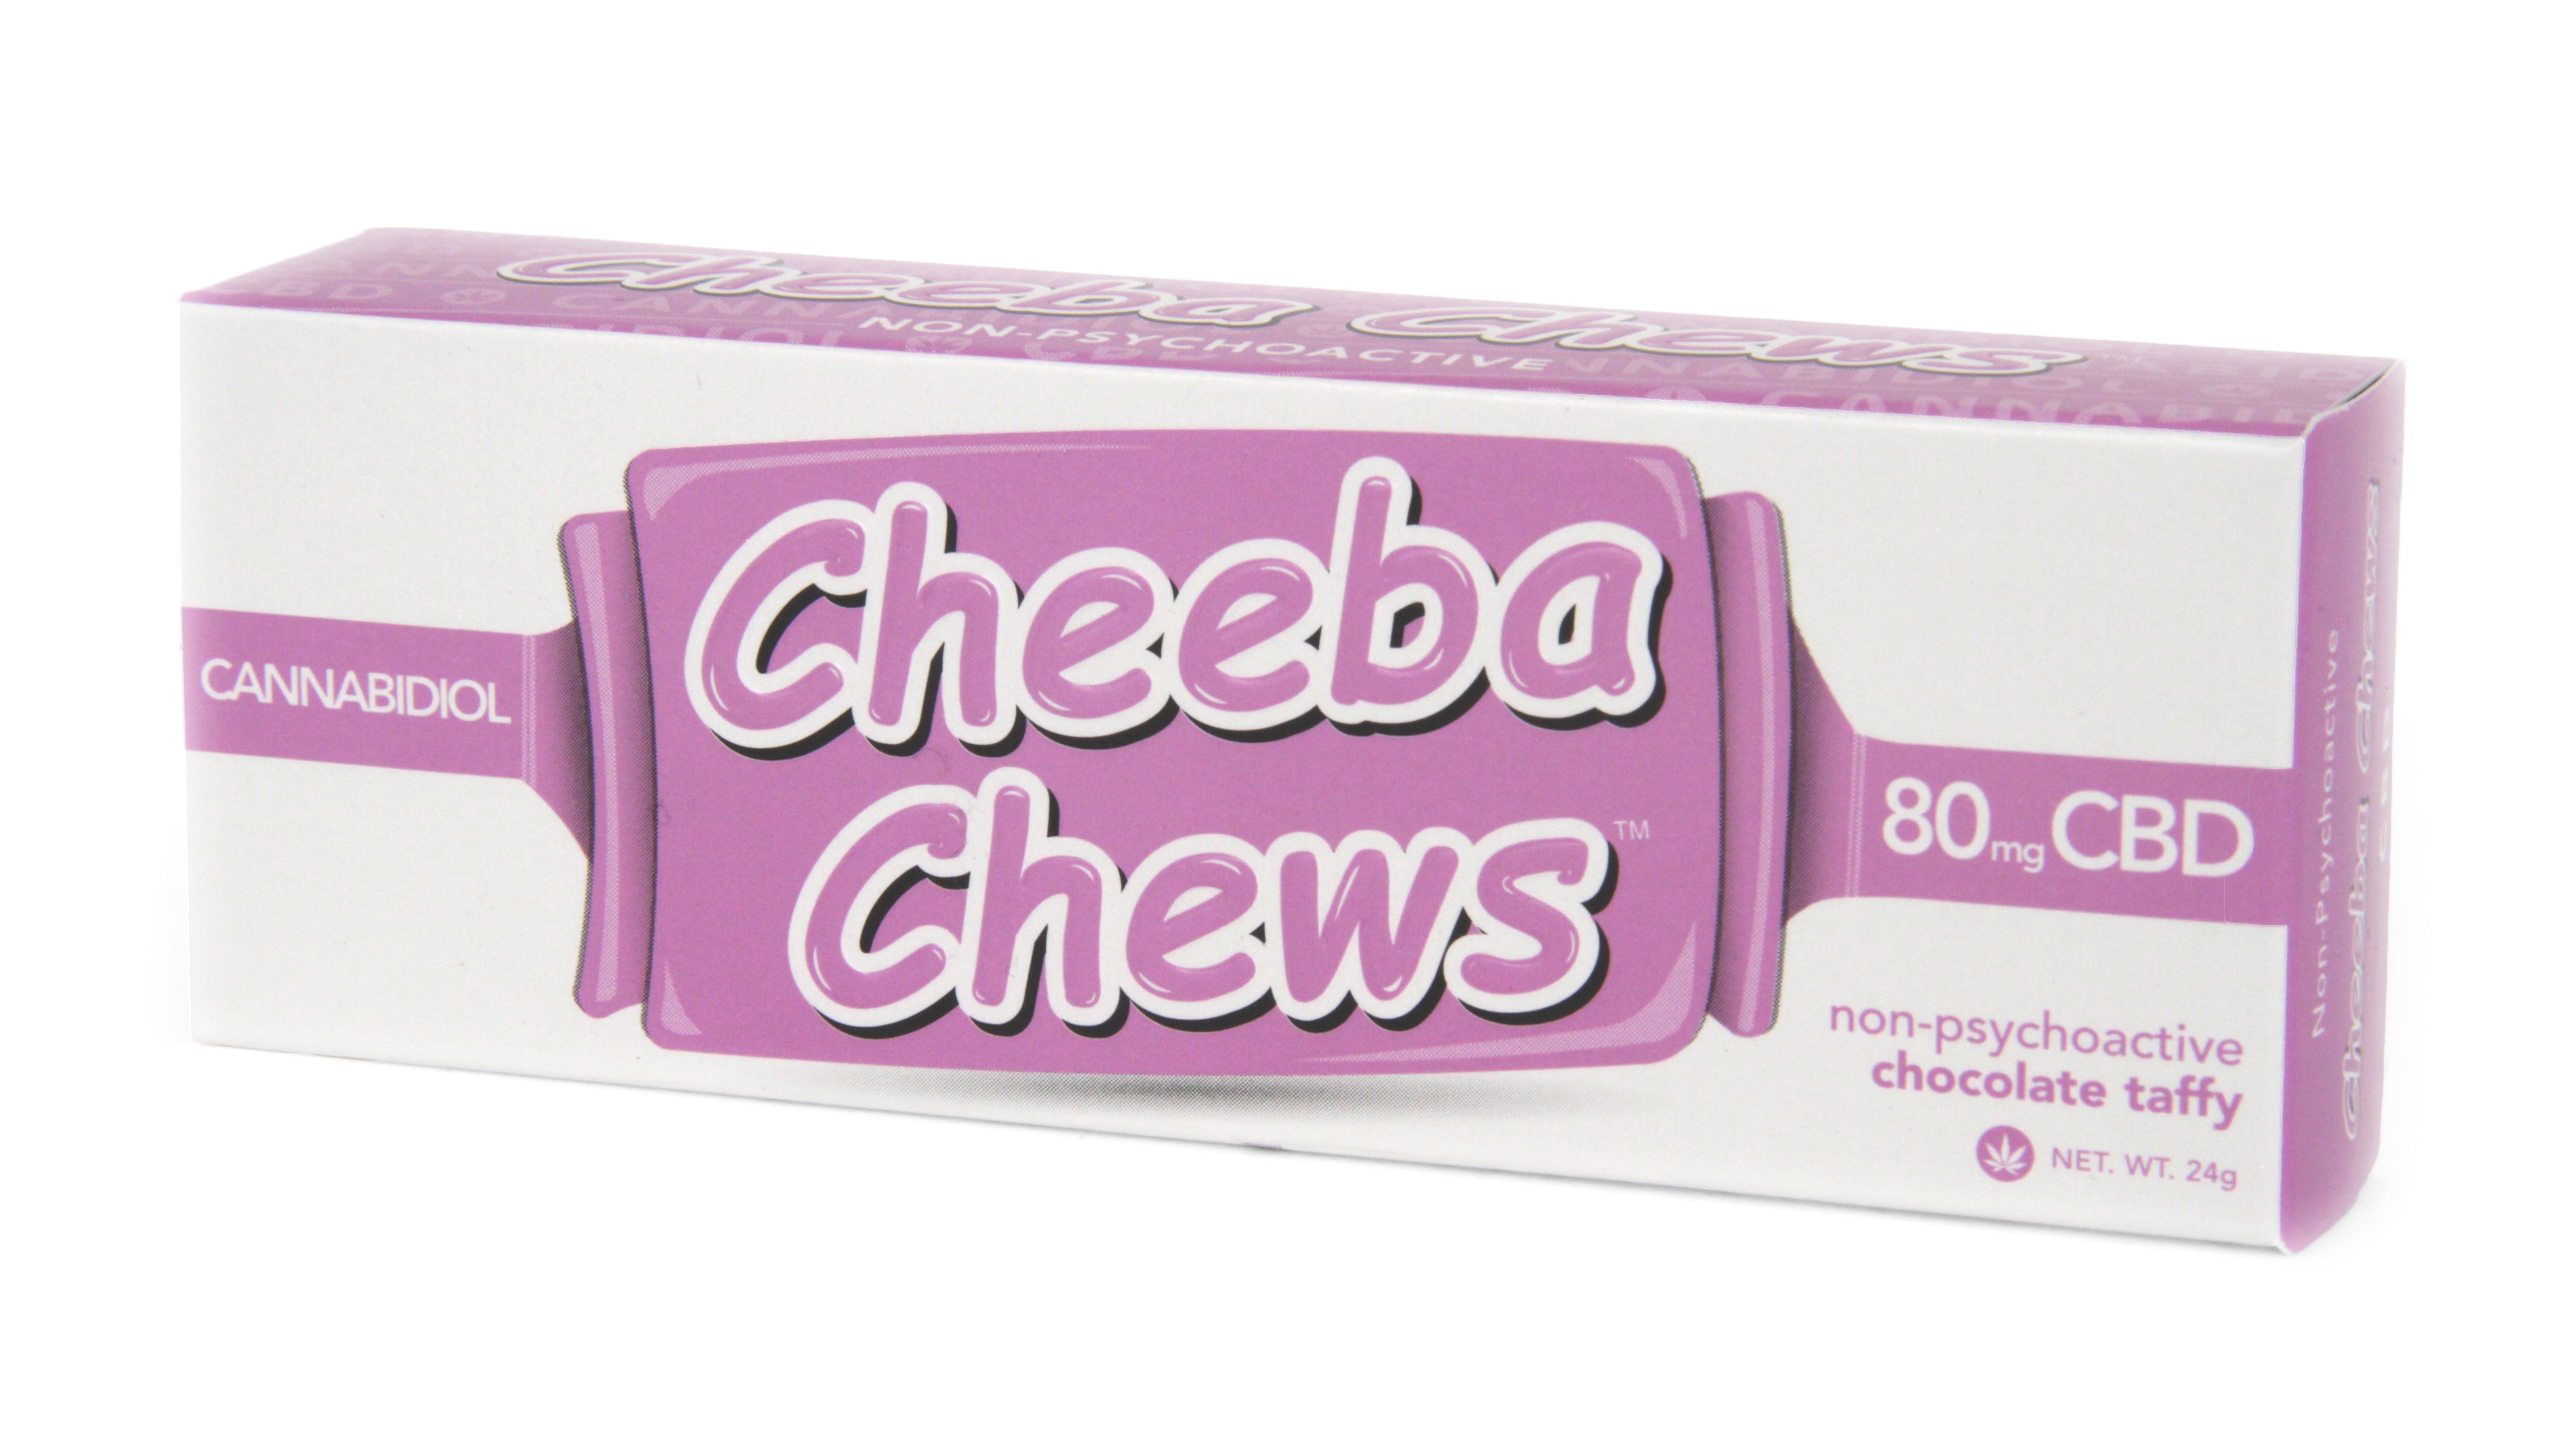 edible-cheeba-chews-taffy-80mg-chocolate-cbd